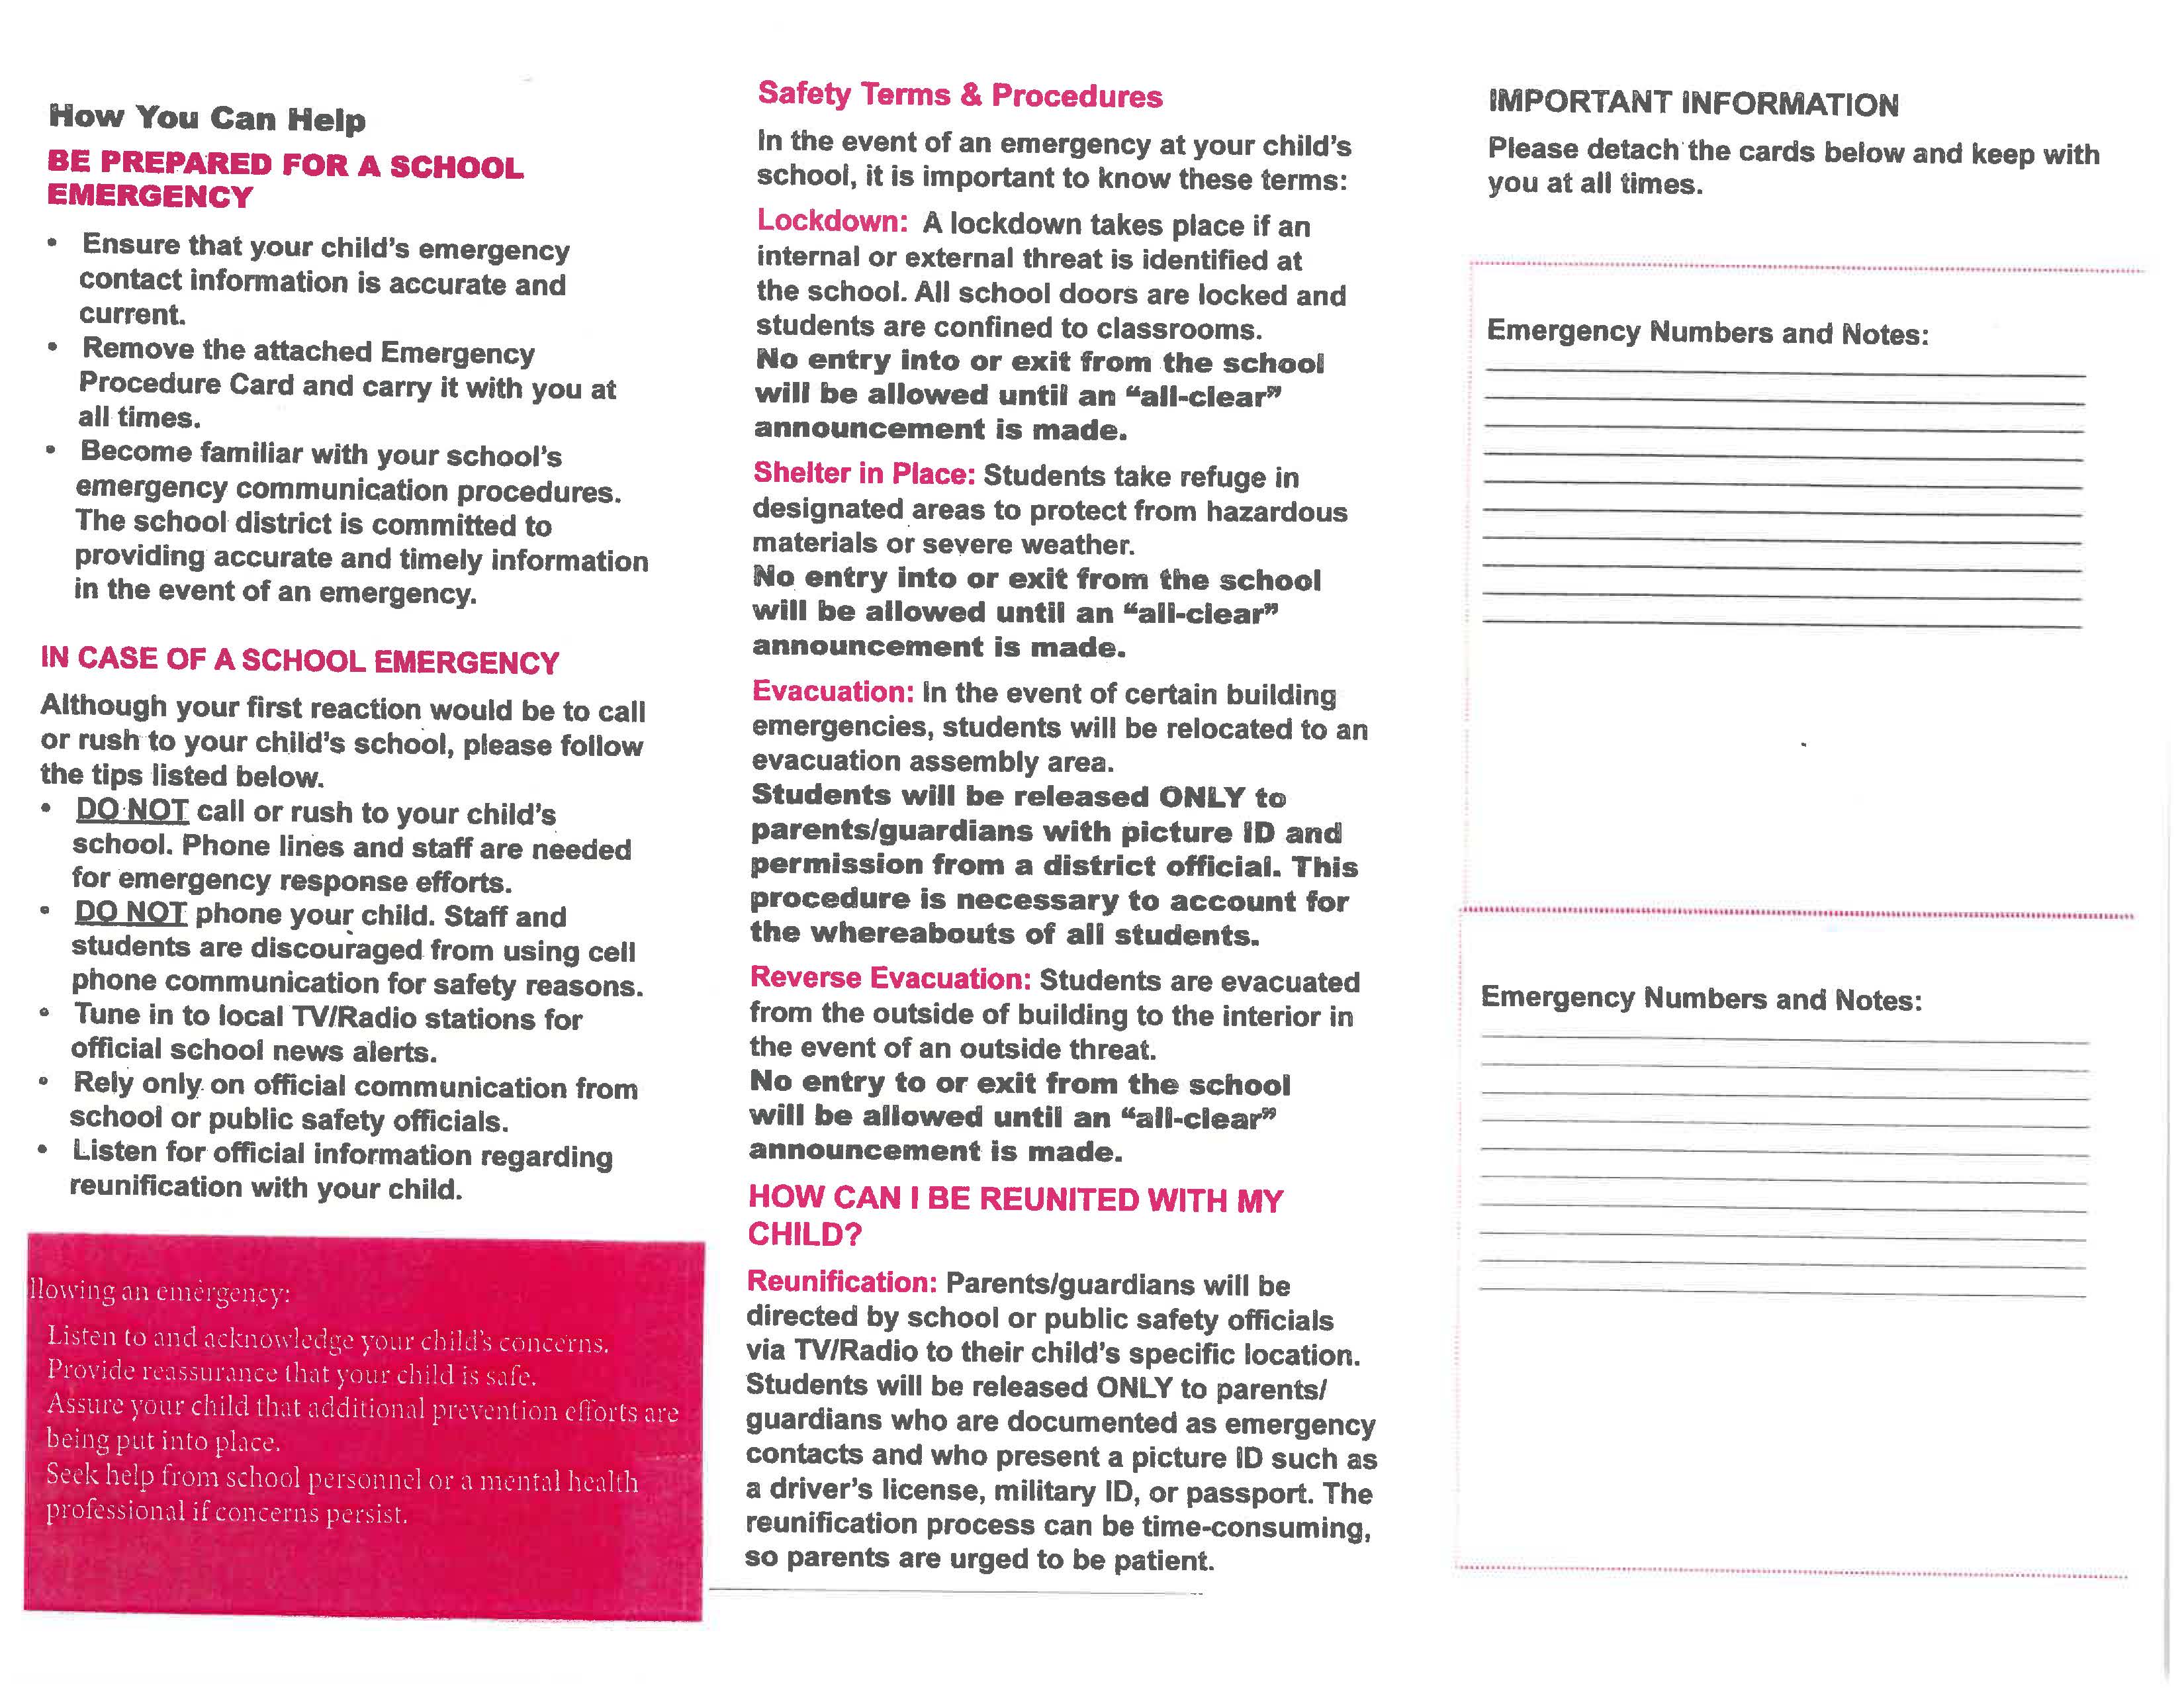 School Emergency Information Guide for Parents/Guardians part 2